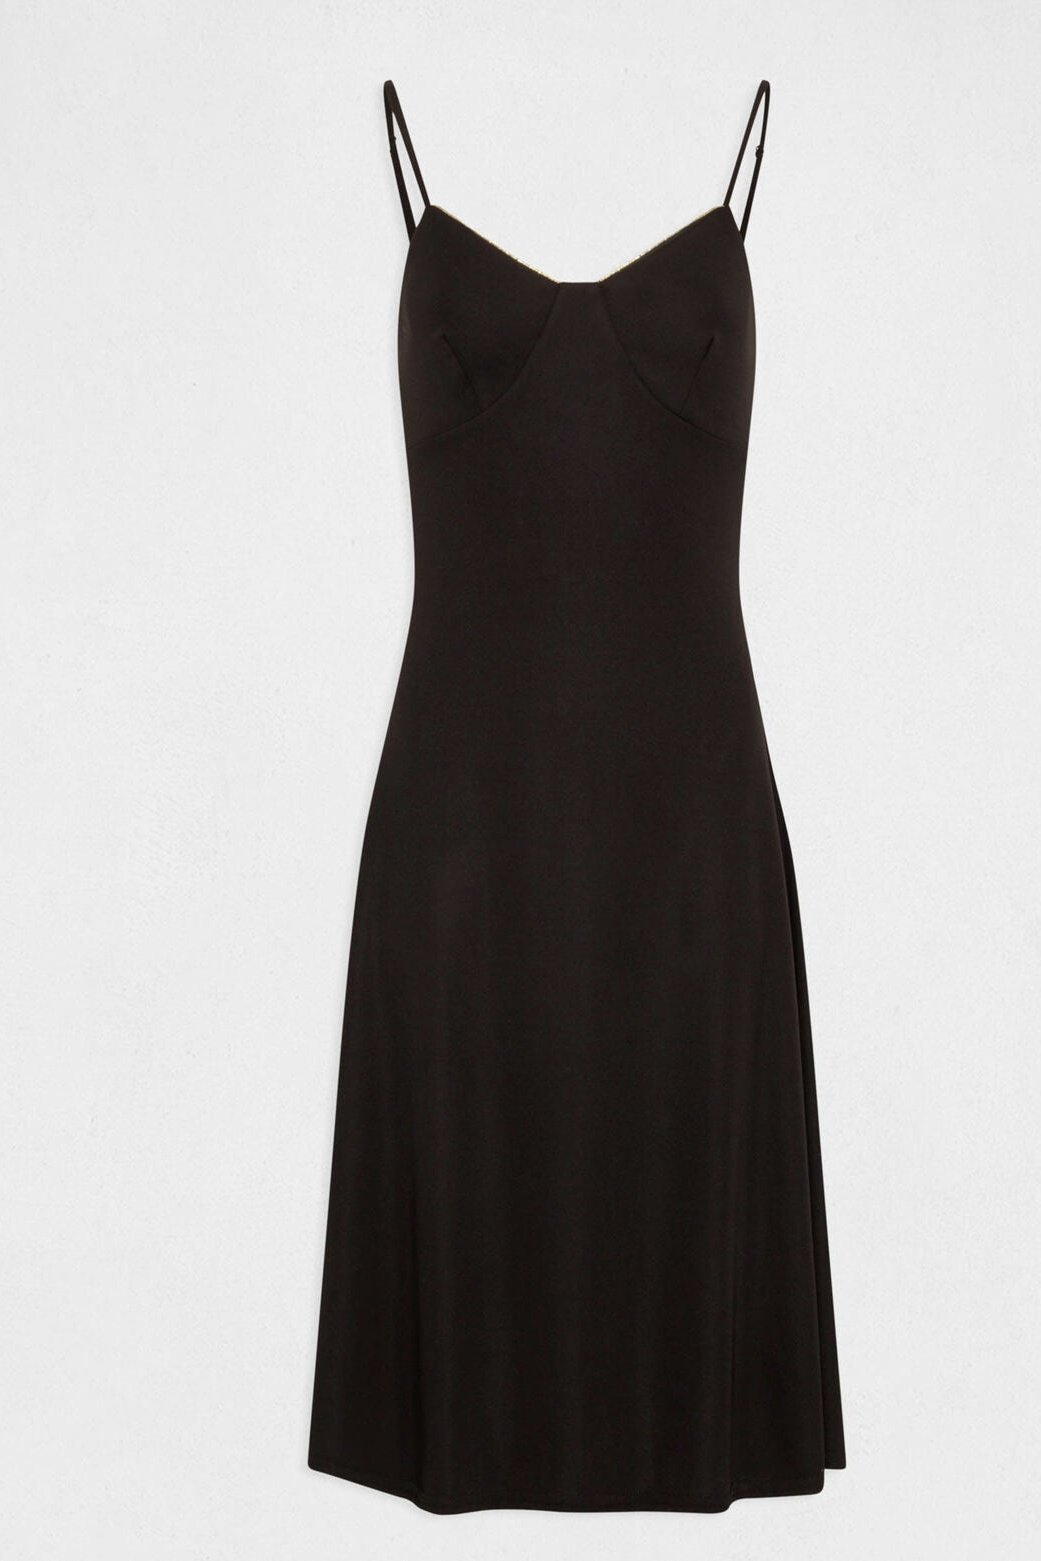 MORGAN - שמלה משוחררת לנשים בצבע שחור - MASHBIR//365